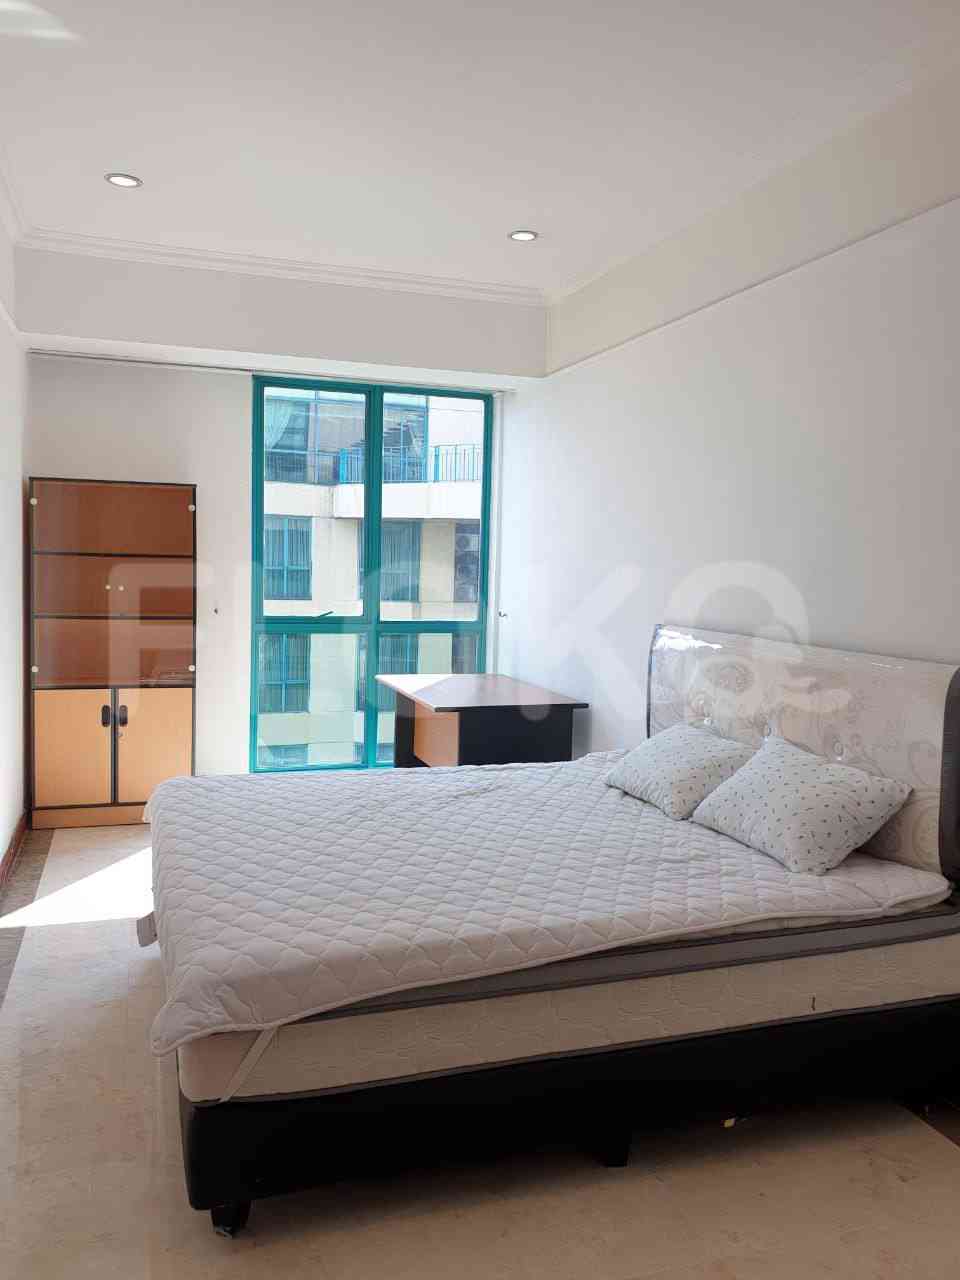 3 Bedroom on 15th Floor for Rent in Casablanca Apartment - ftebc2 7